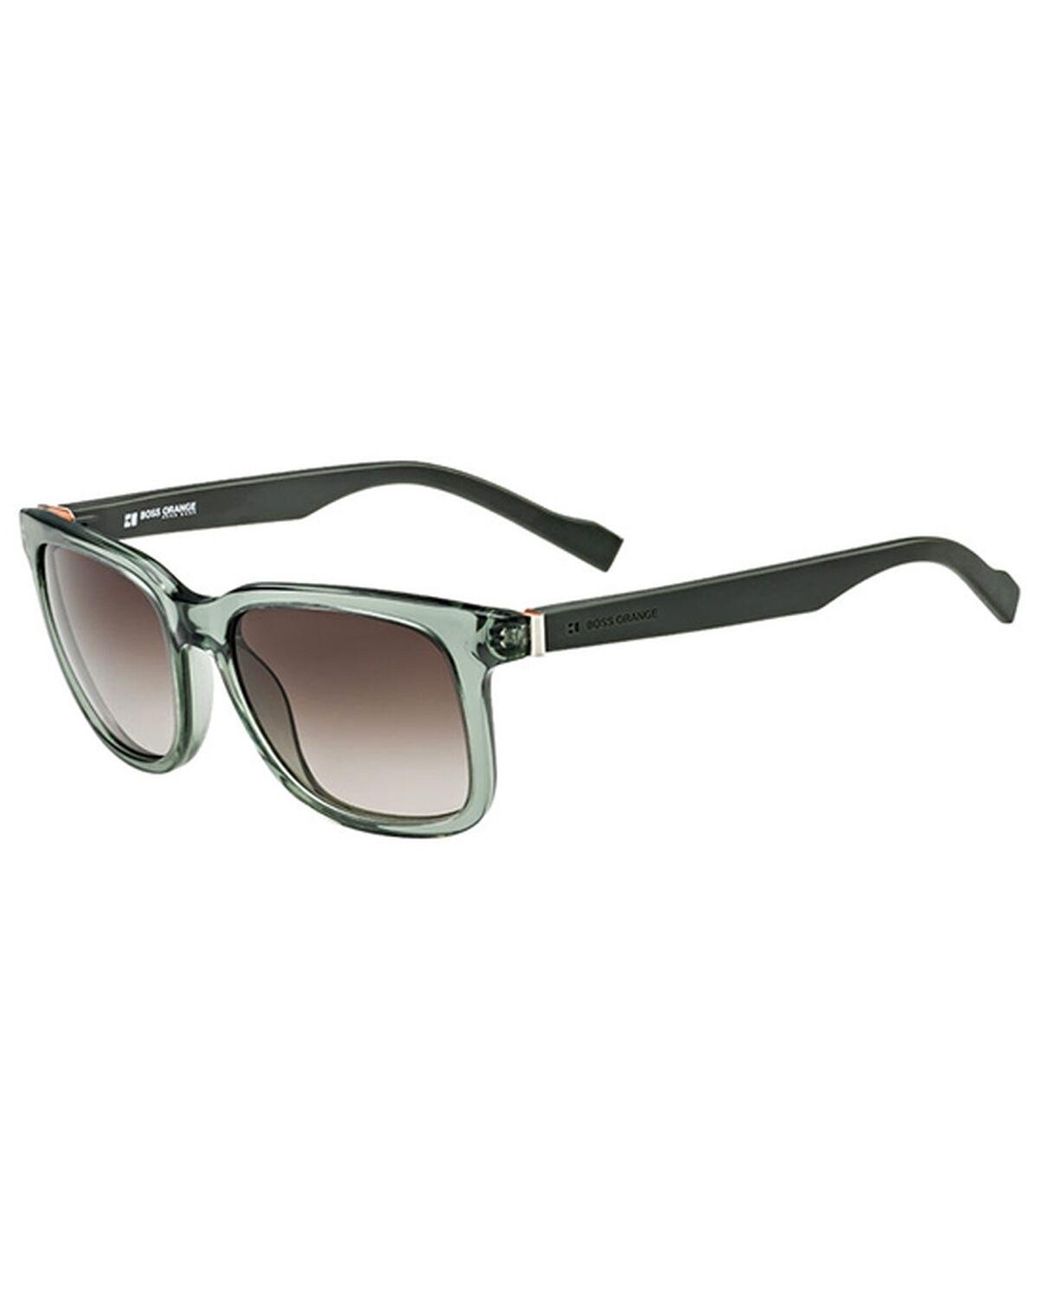 BOSS by HUGO BOSS Ladies' Sunglasses Boss Orange 0127_s in Black | Lyst